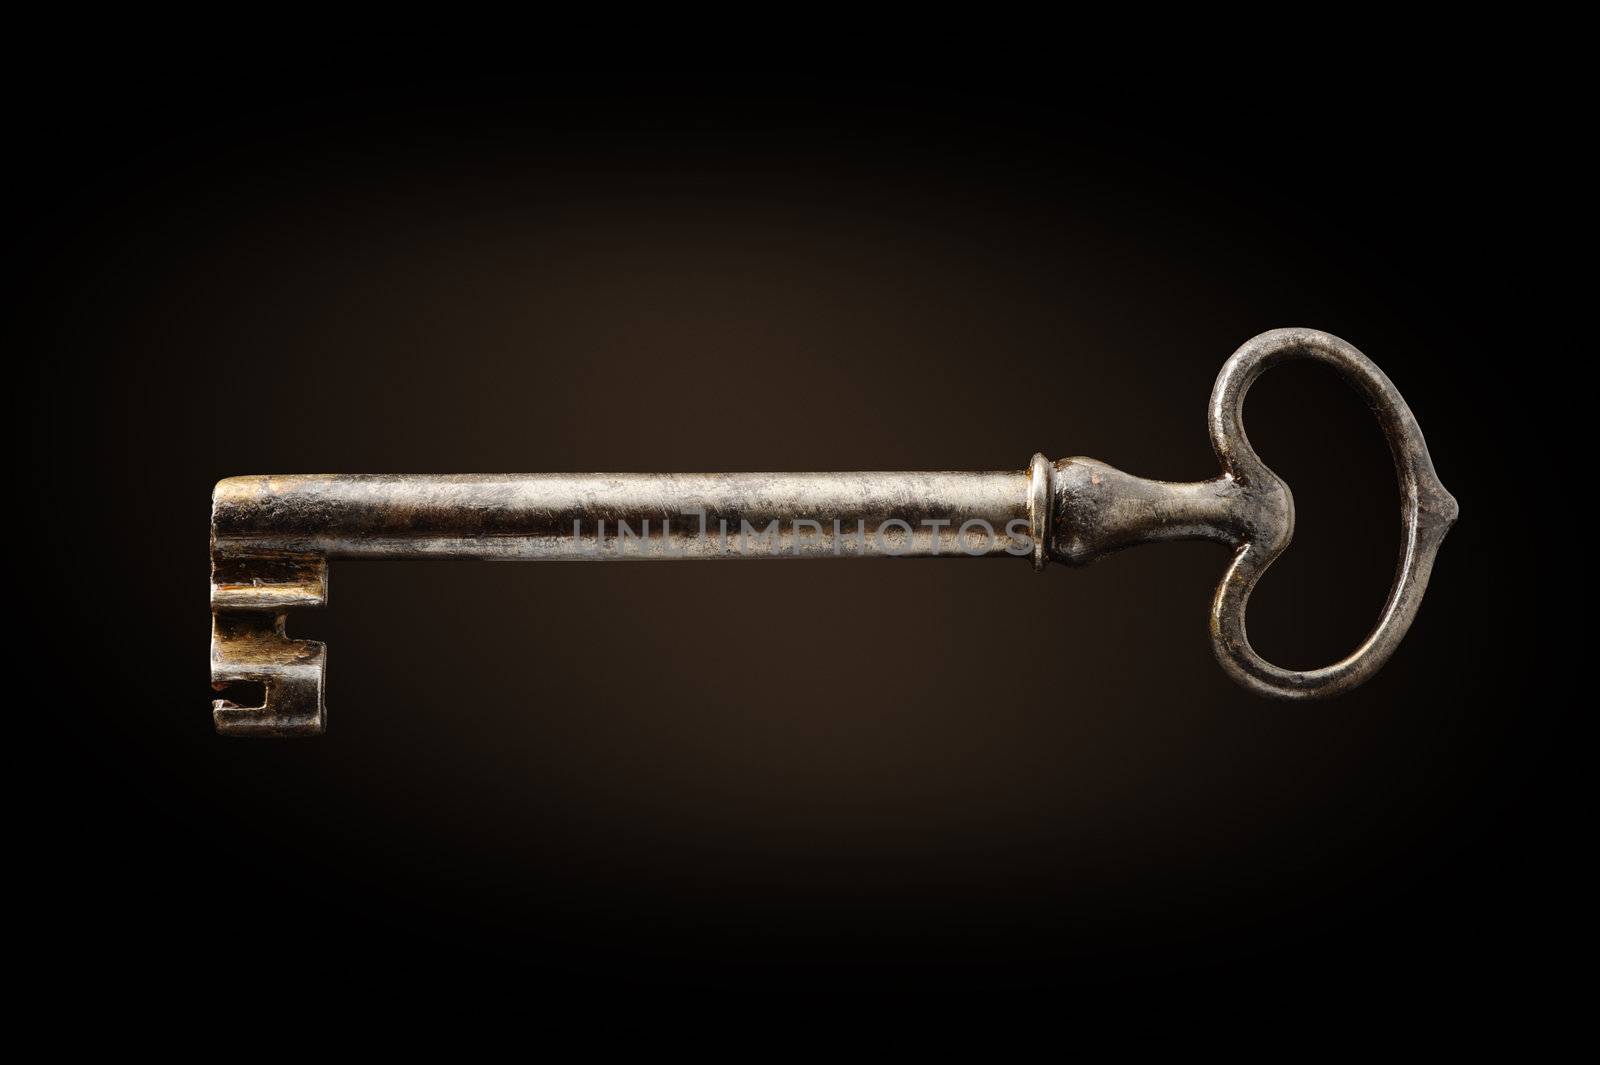 old key on dark background by stokkete